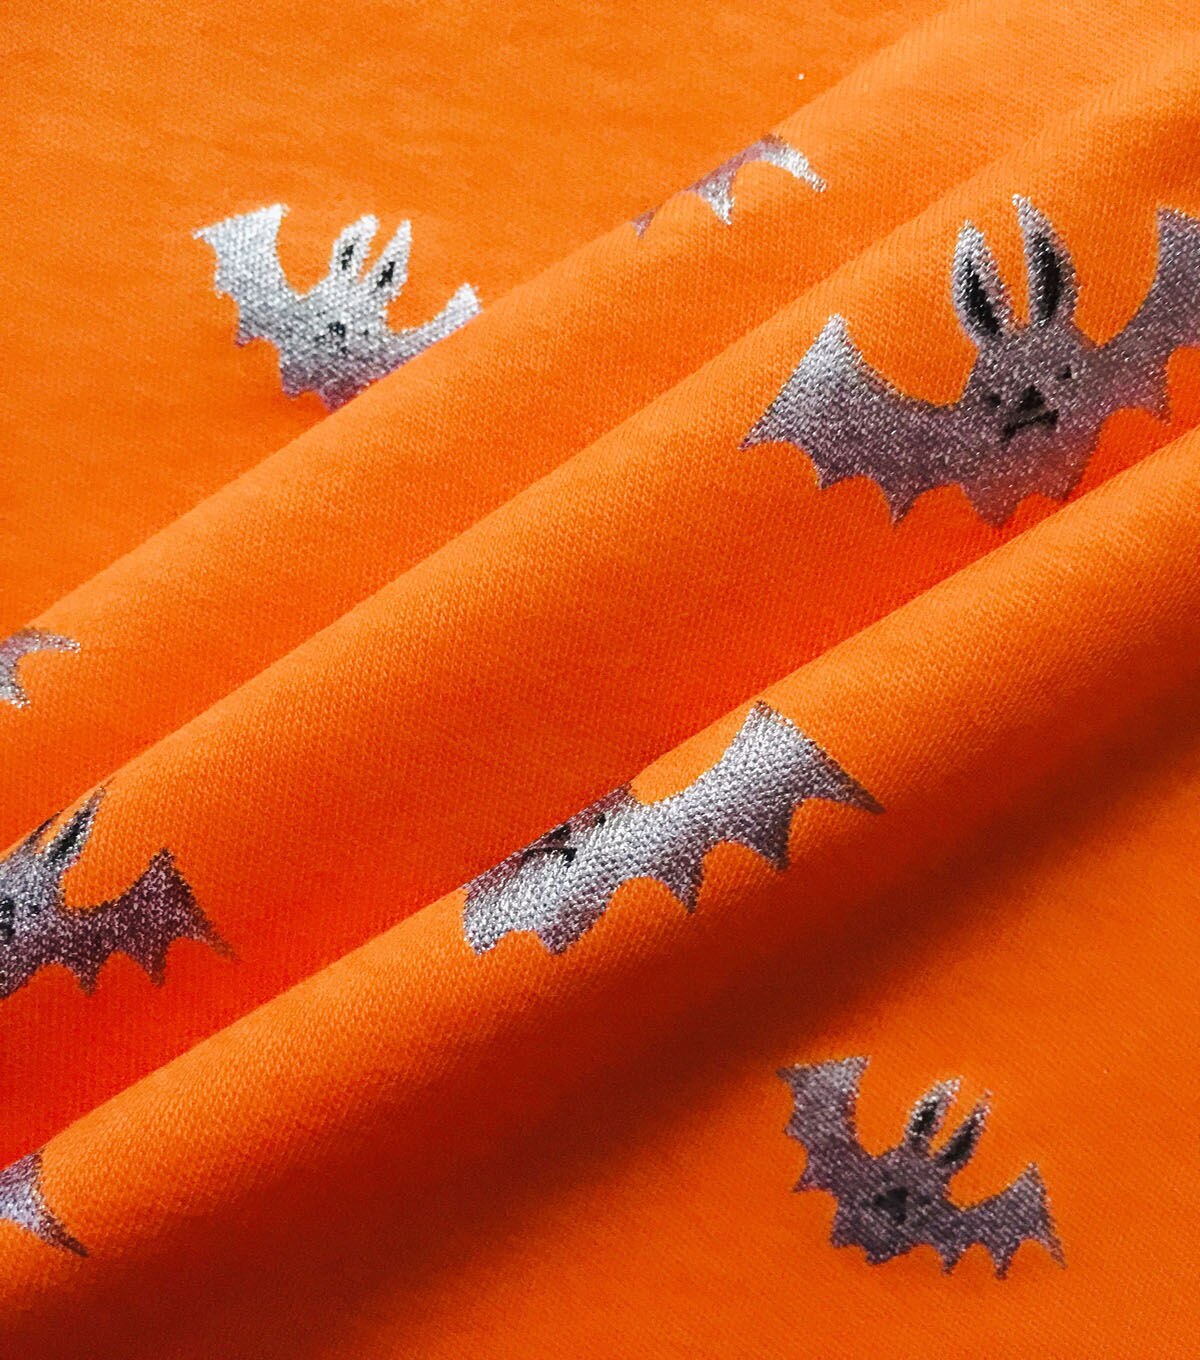 HAPPY HALLOWEEN Bat Ghost Spider Cotton 4 Way Stretch Knit JERSEY Dress Fabric 